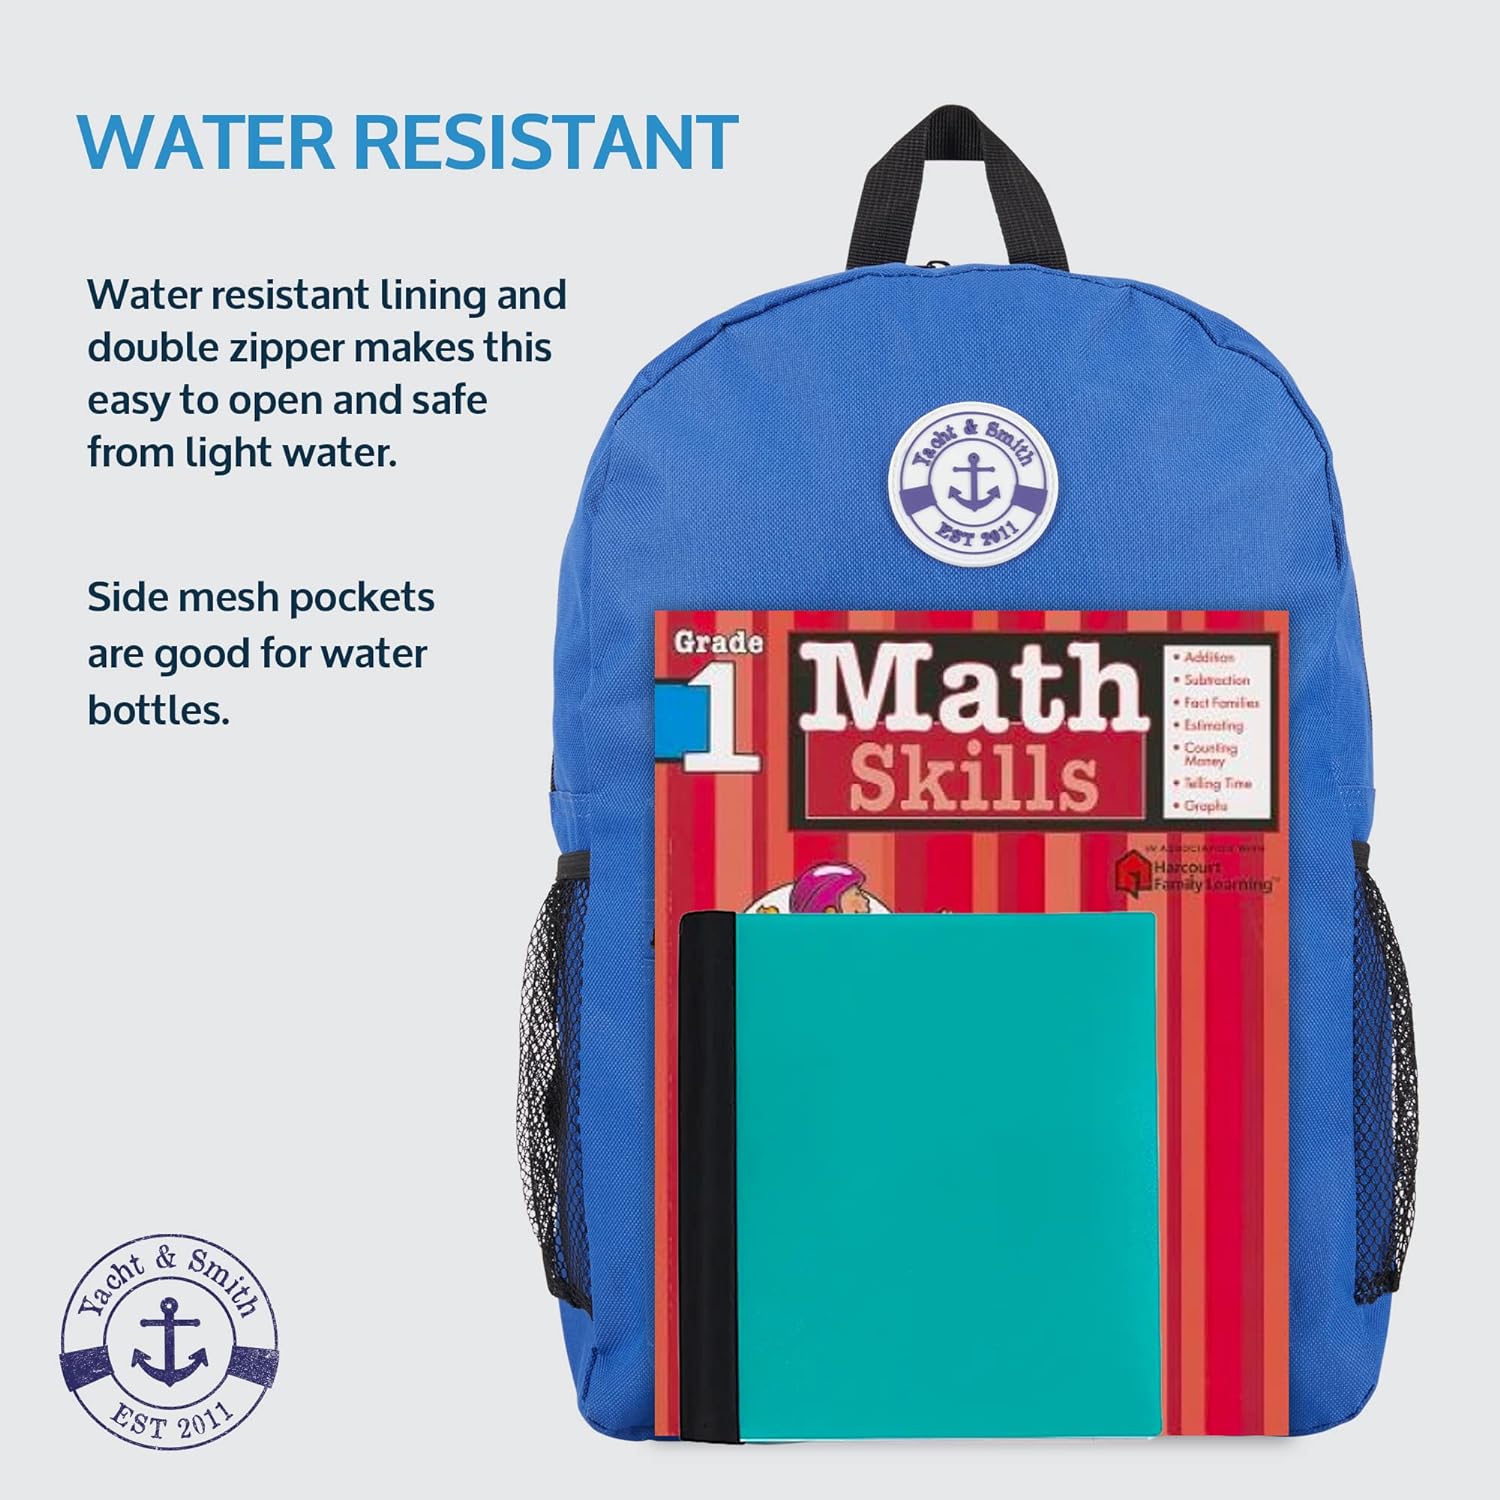 YACHT & SMITH 12 Pack 17 Inch Wholesale Backpacks for Kids, Case of Bookbags Water Resistant Knapsacks (12 Pack Backpack Girls)